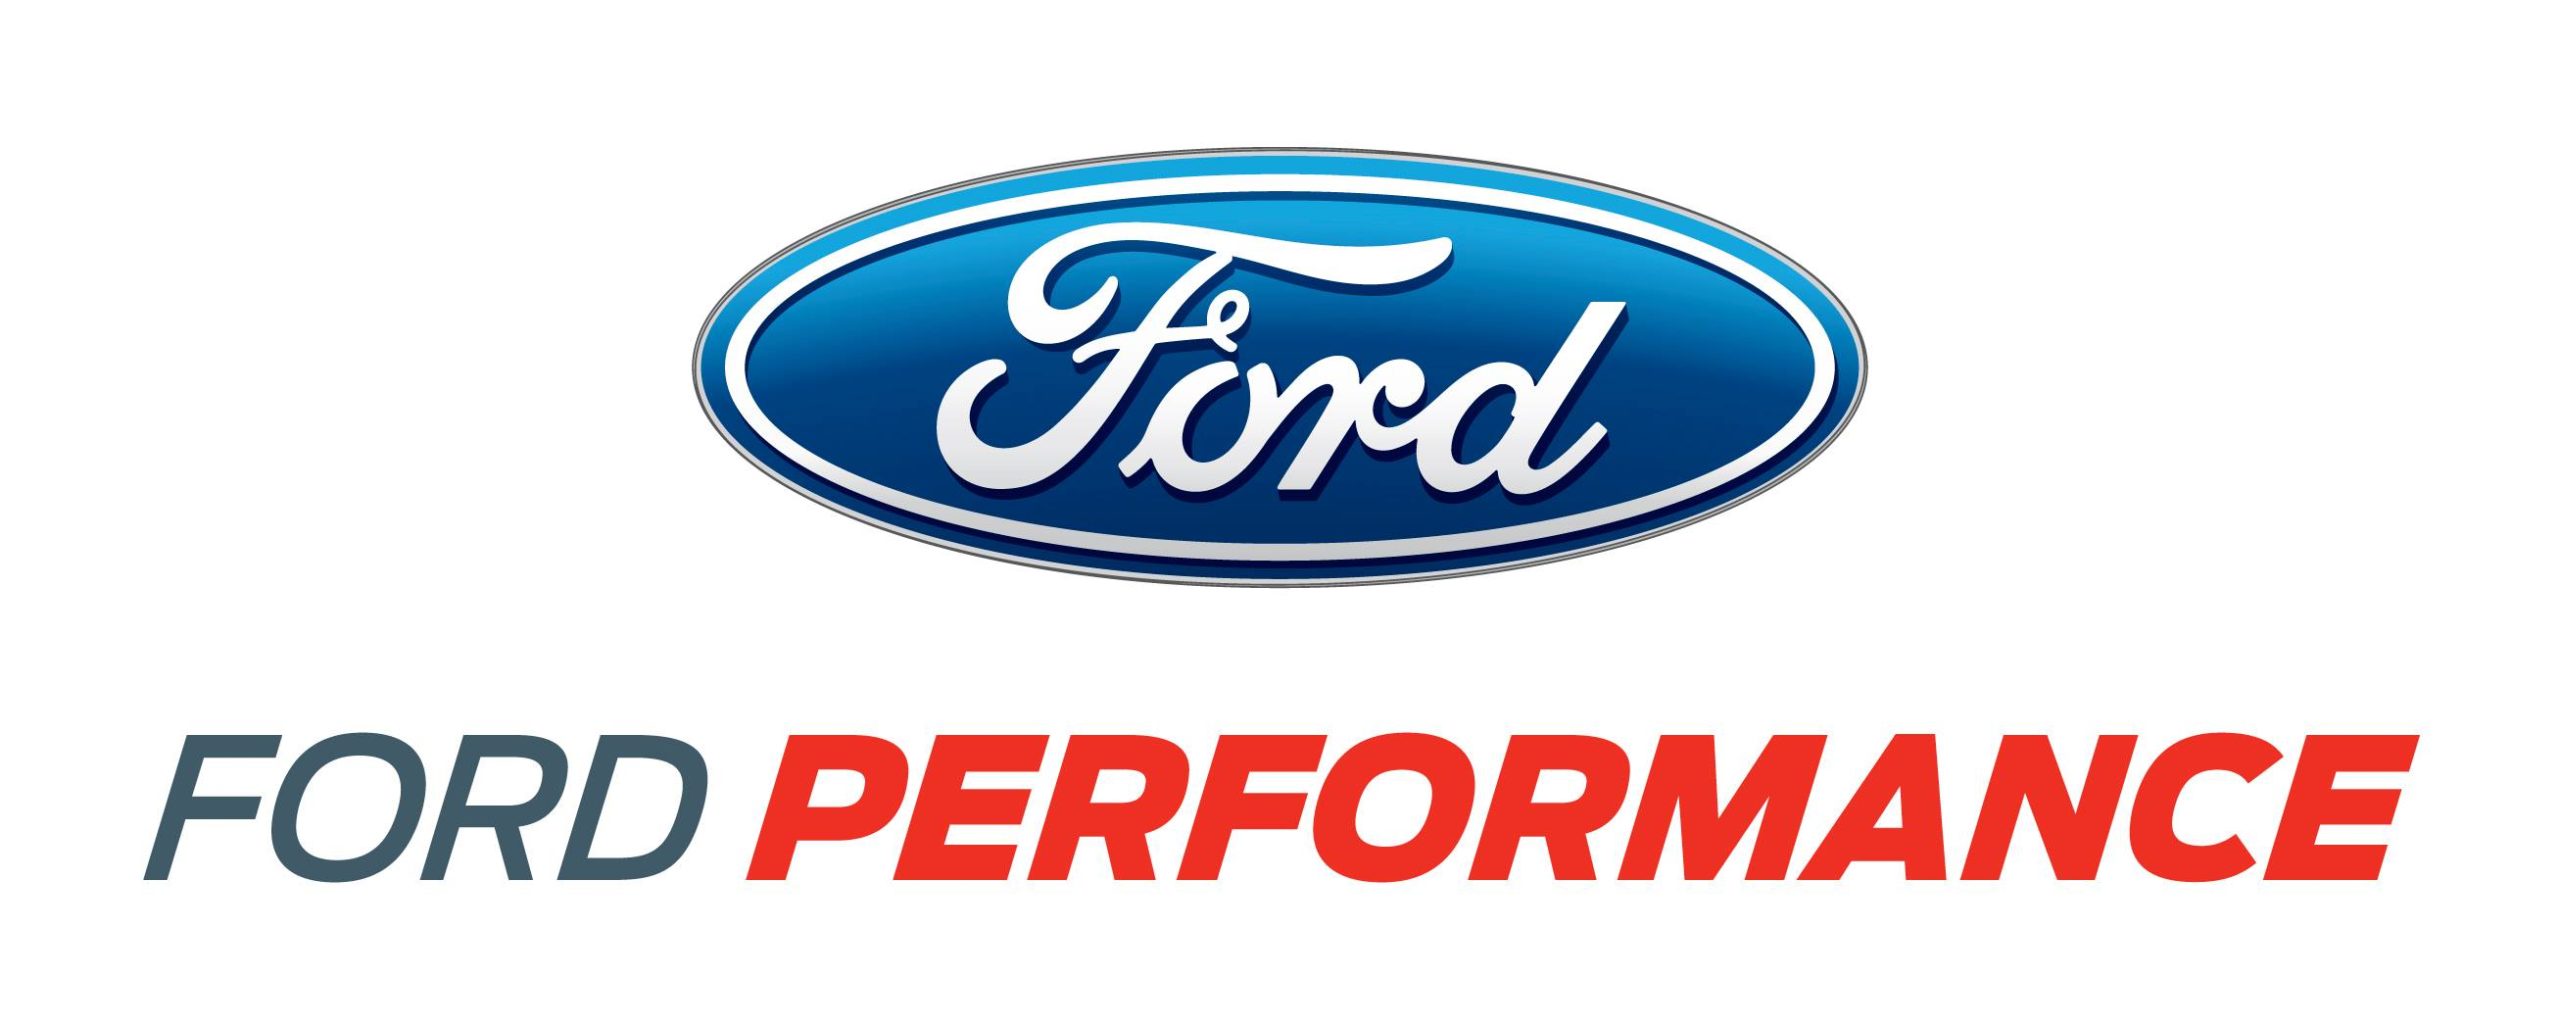 Ford_Performance_logo